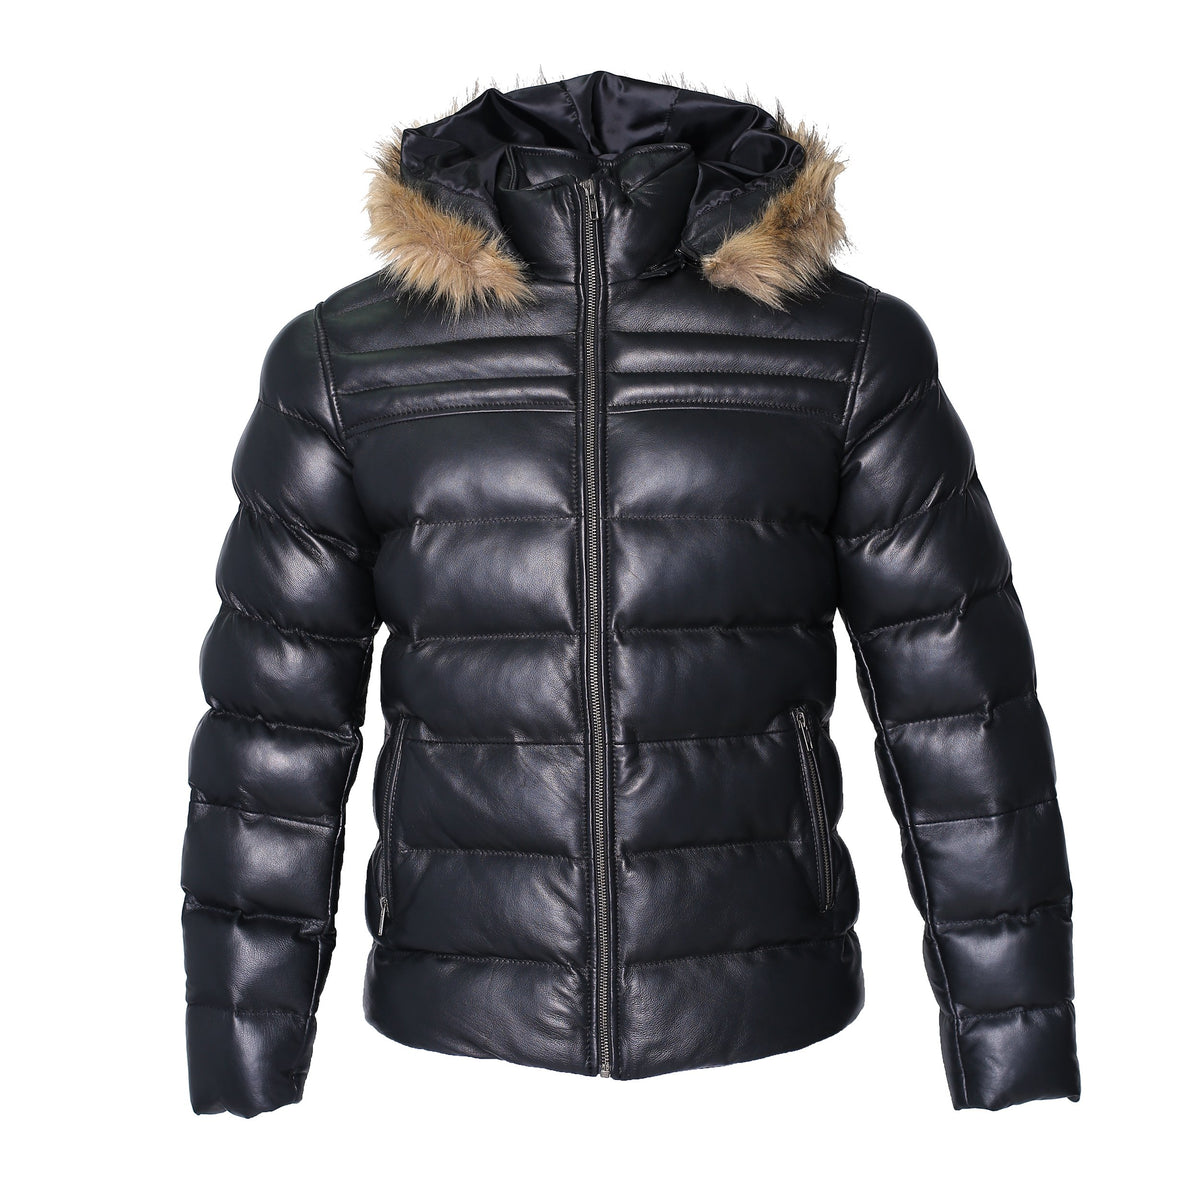 Men's Crimson Black Puffer Winter Down Leather Jacket with Fur Angelwarriorfitness.com